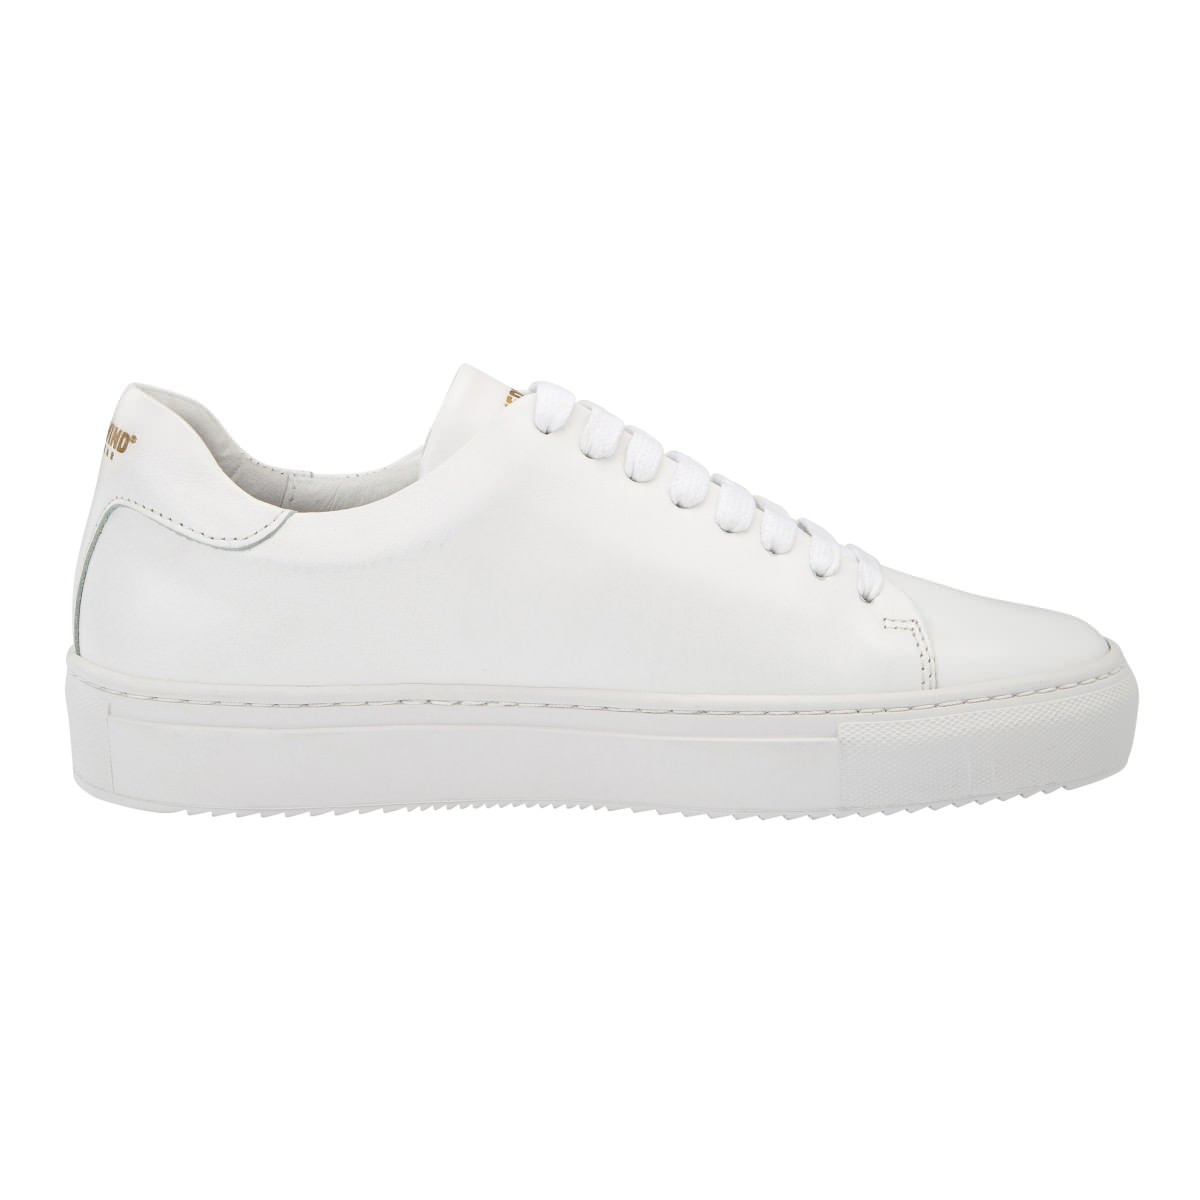 Suedwind-Ashton-Leather-Leder-Sneaker-Schuhe-Boots-White-Weiss-10170011-06_1280x1280